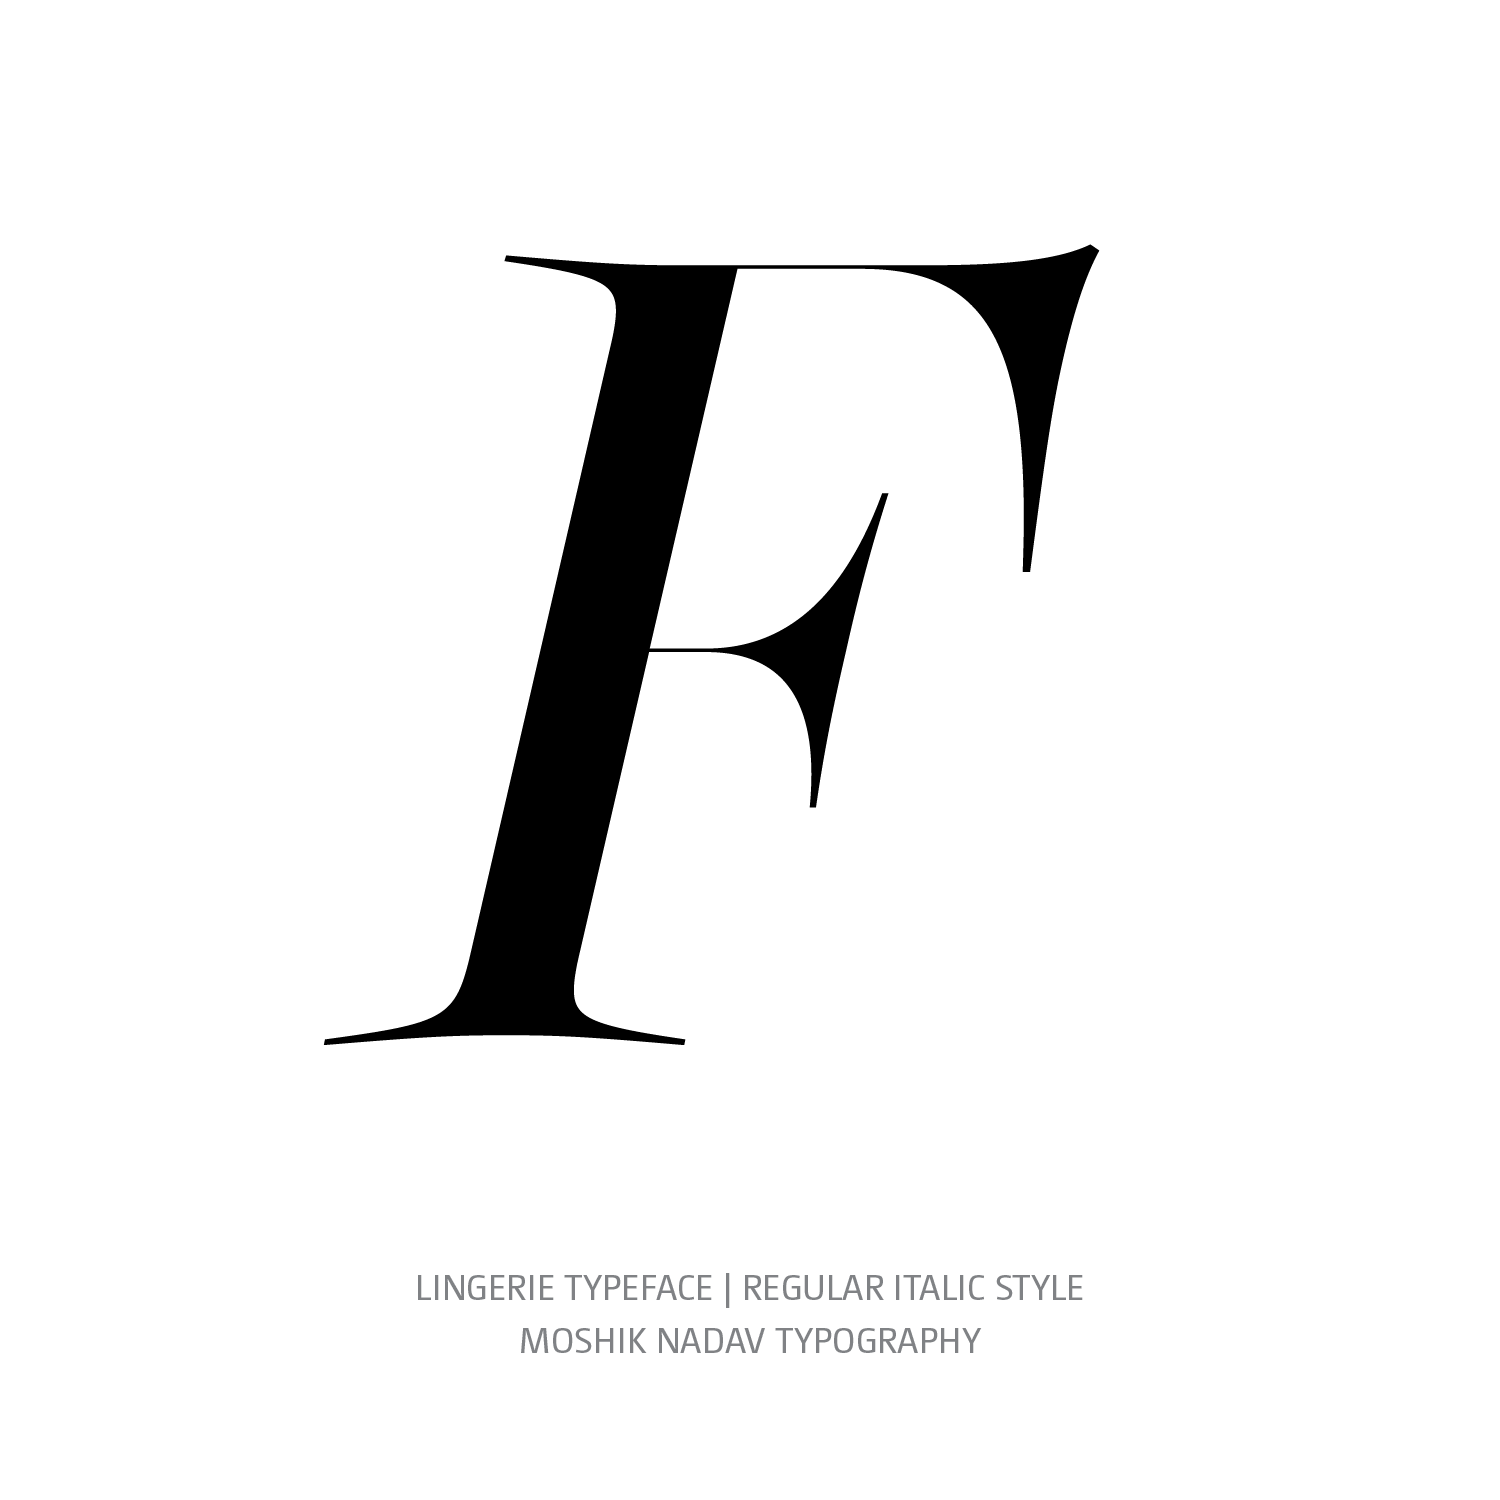 Lingerie Typeface Regular Italic F- Fashion fonts by Moshik Nadav Typography